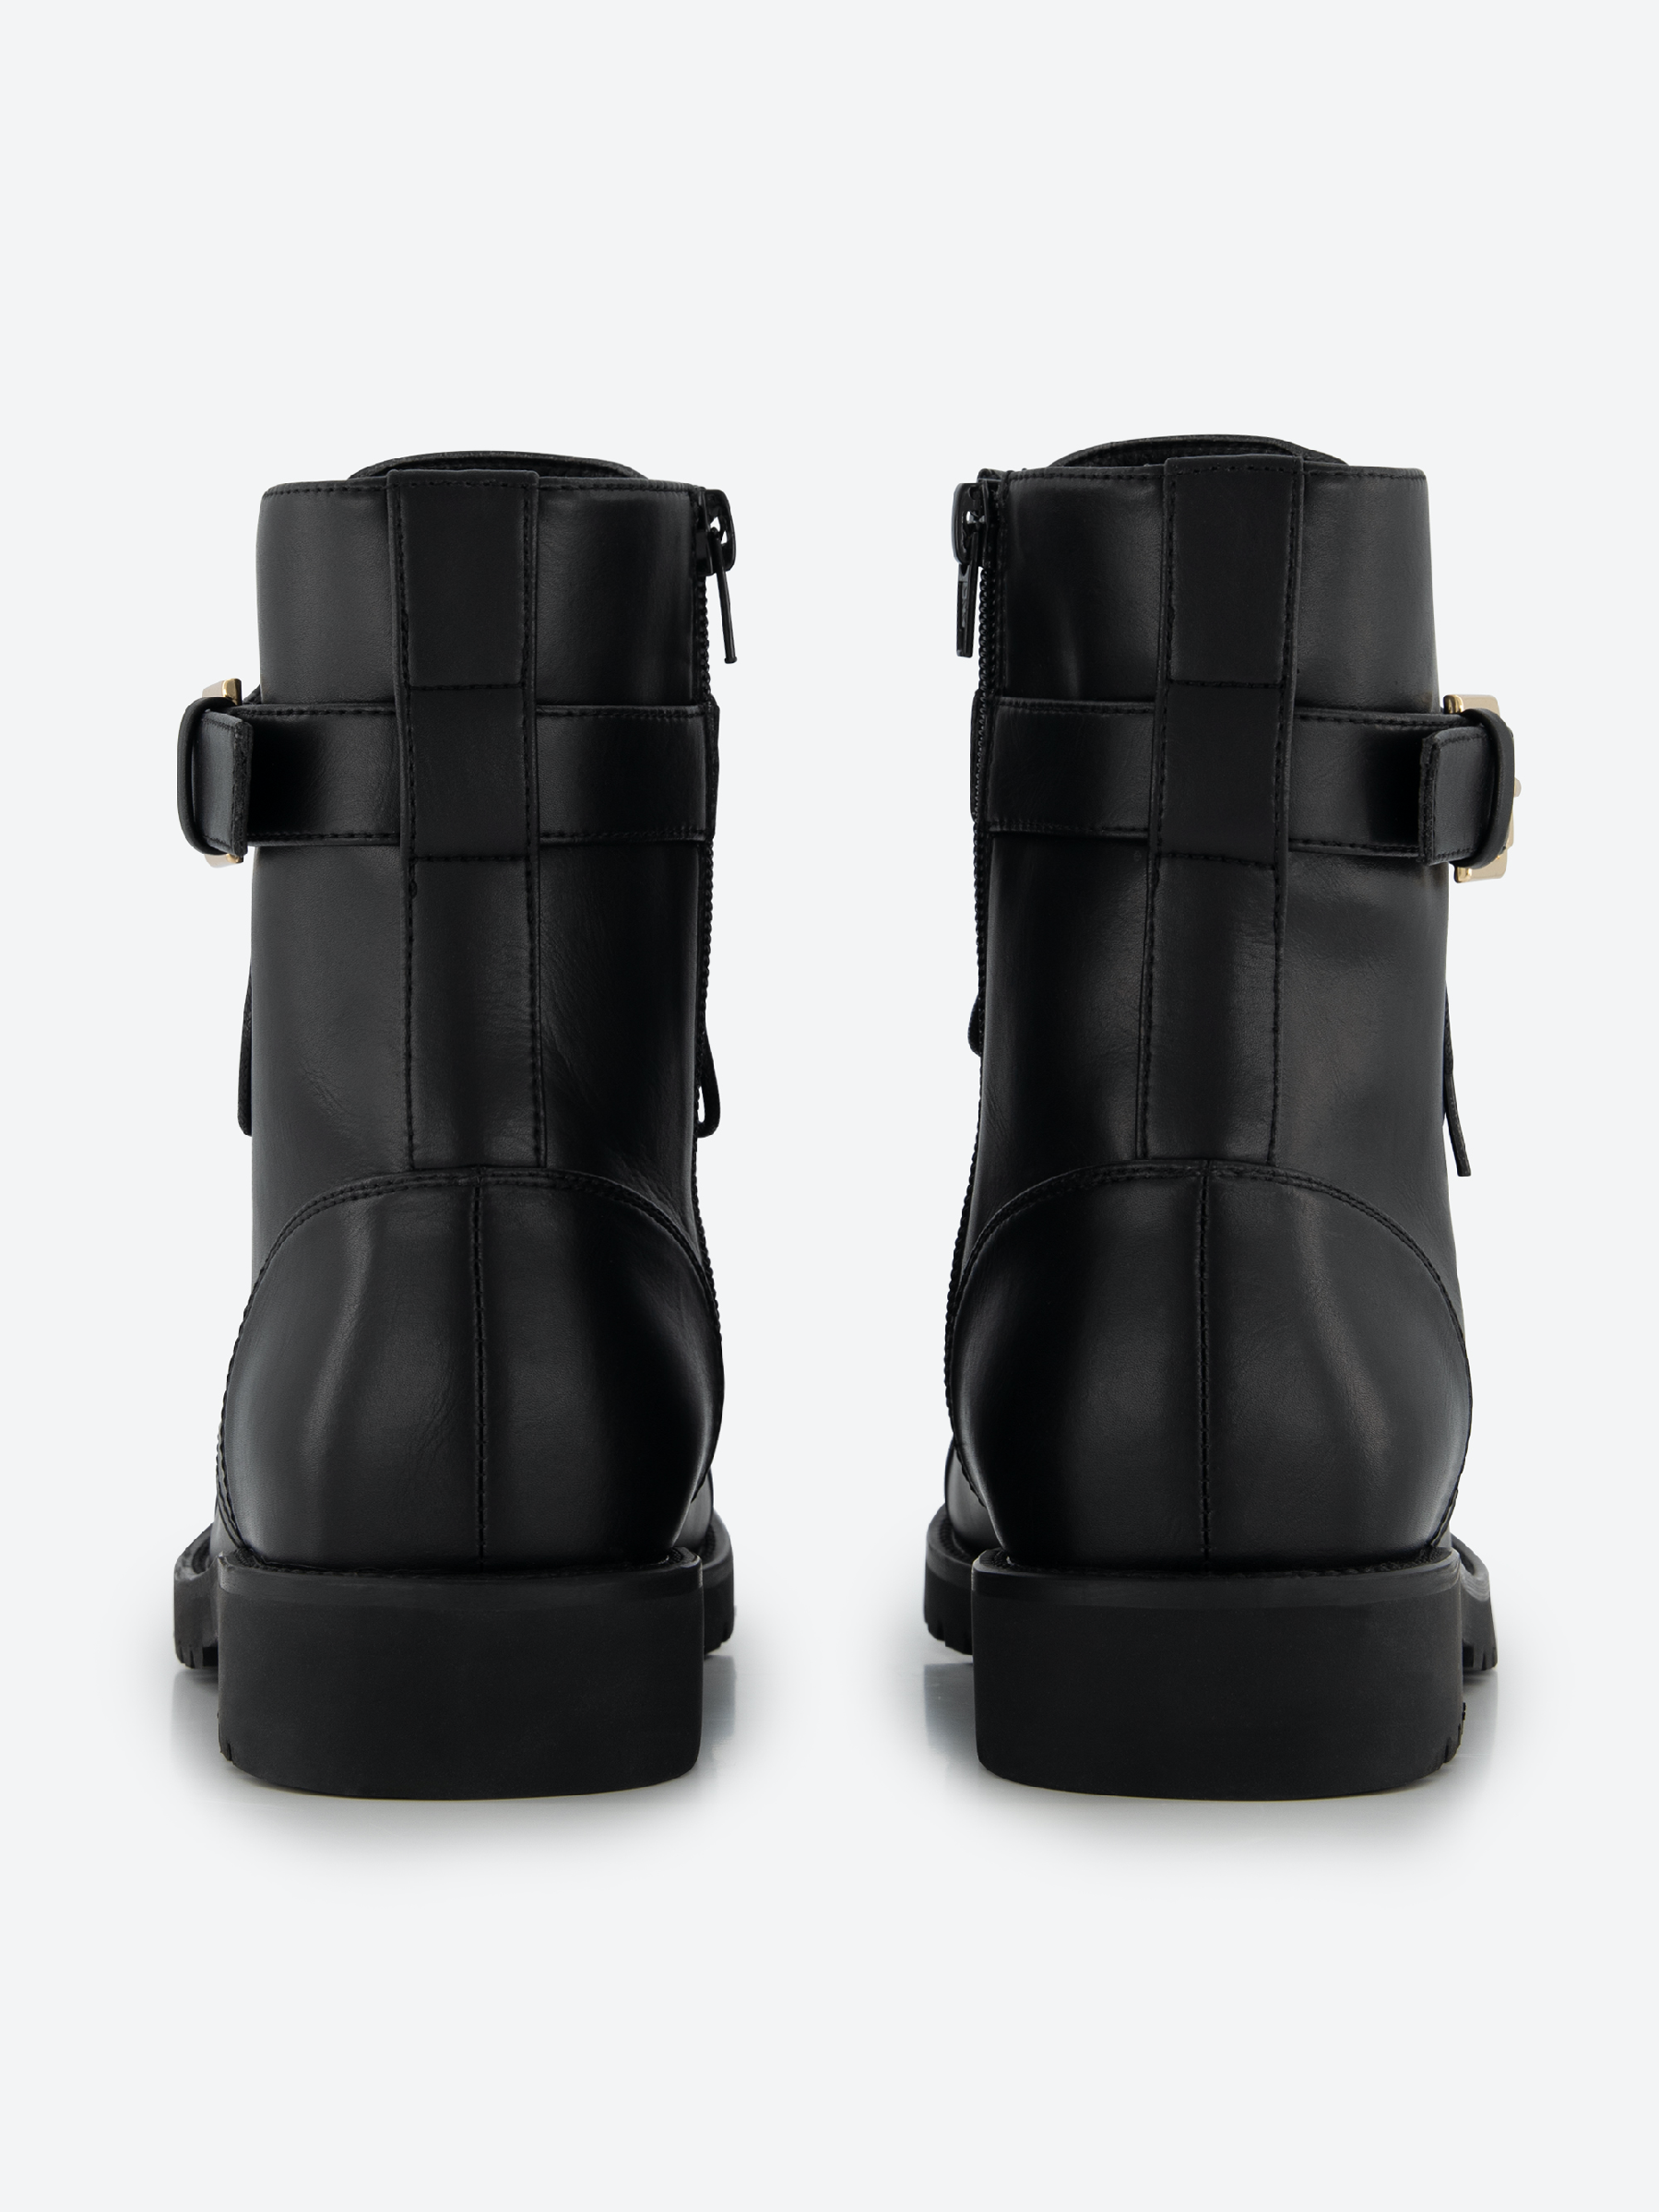 Meisjes Brynn Boots van Nik & Nik in de kleur Black in maat 41.